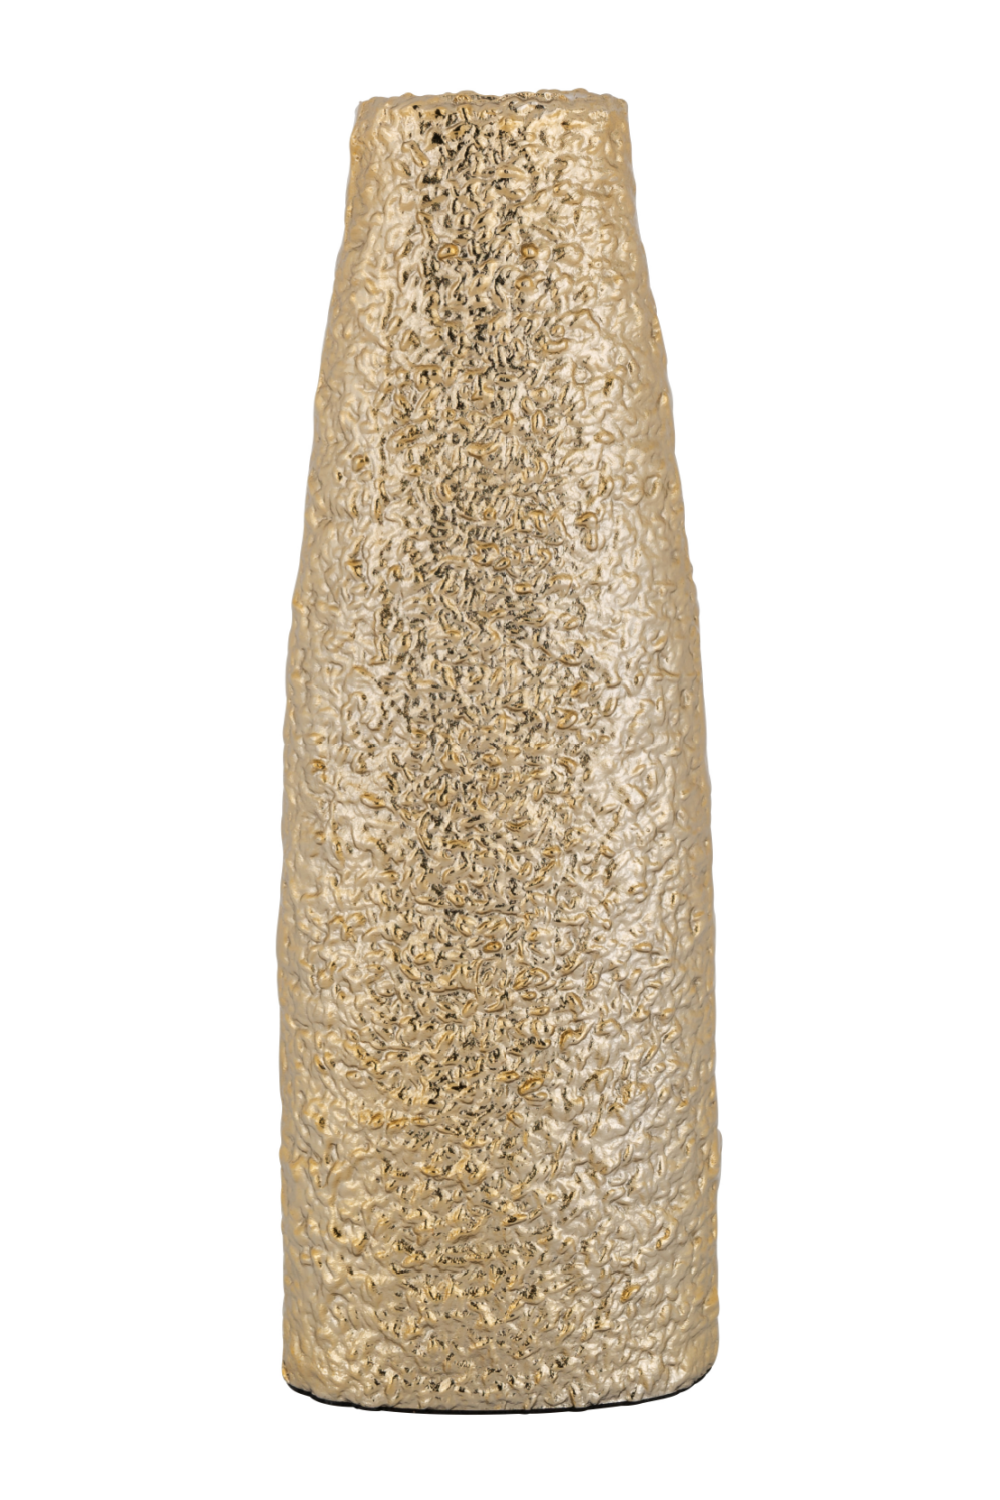 Gold Aluminum Textured Vase S | OROA Lucino | OROA.com